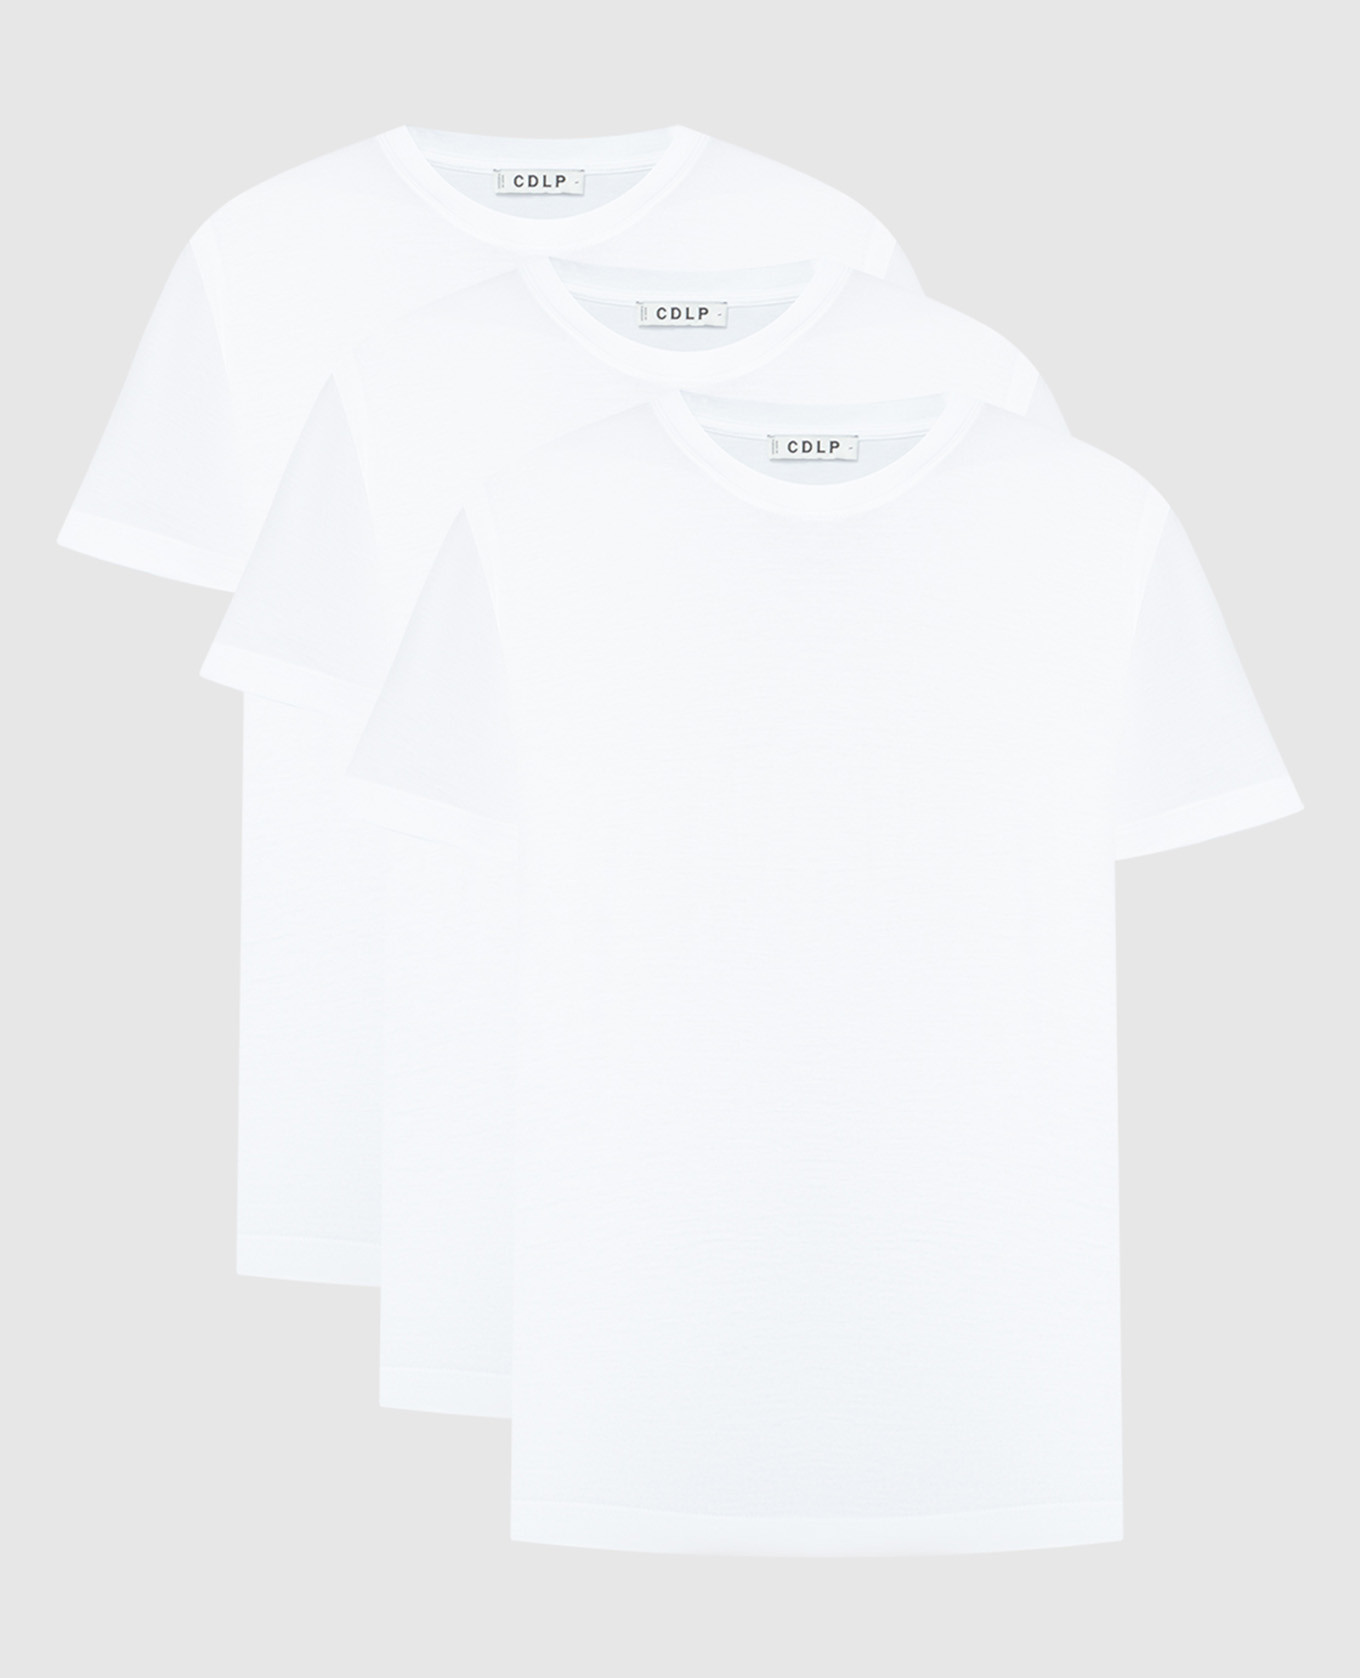 Set of white t-shirts